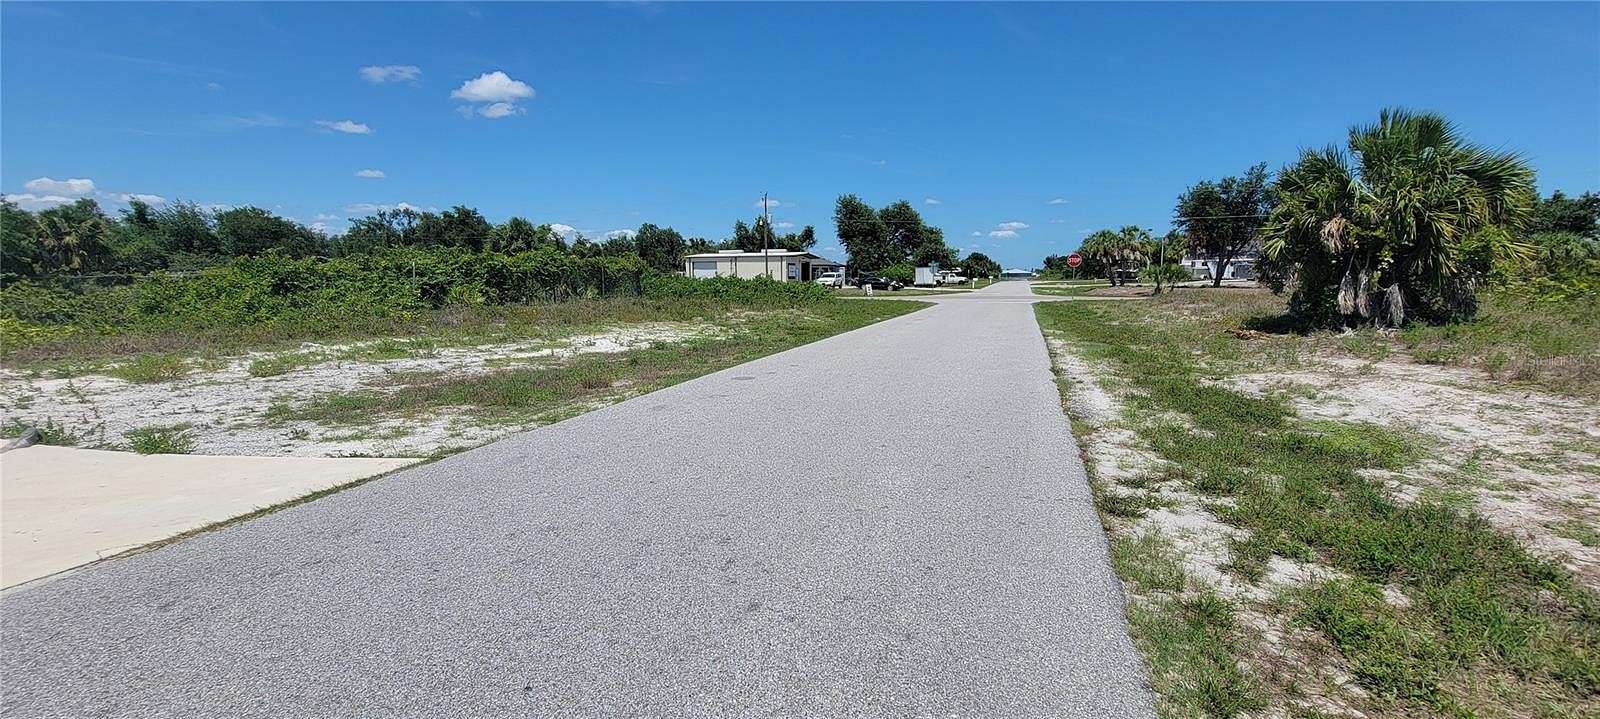 0.52 Acres of Commercial Land for Sale in Punta Gorda, Florida